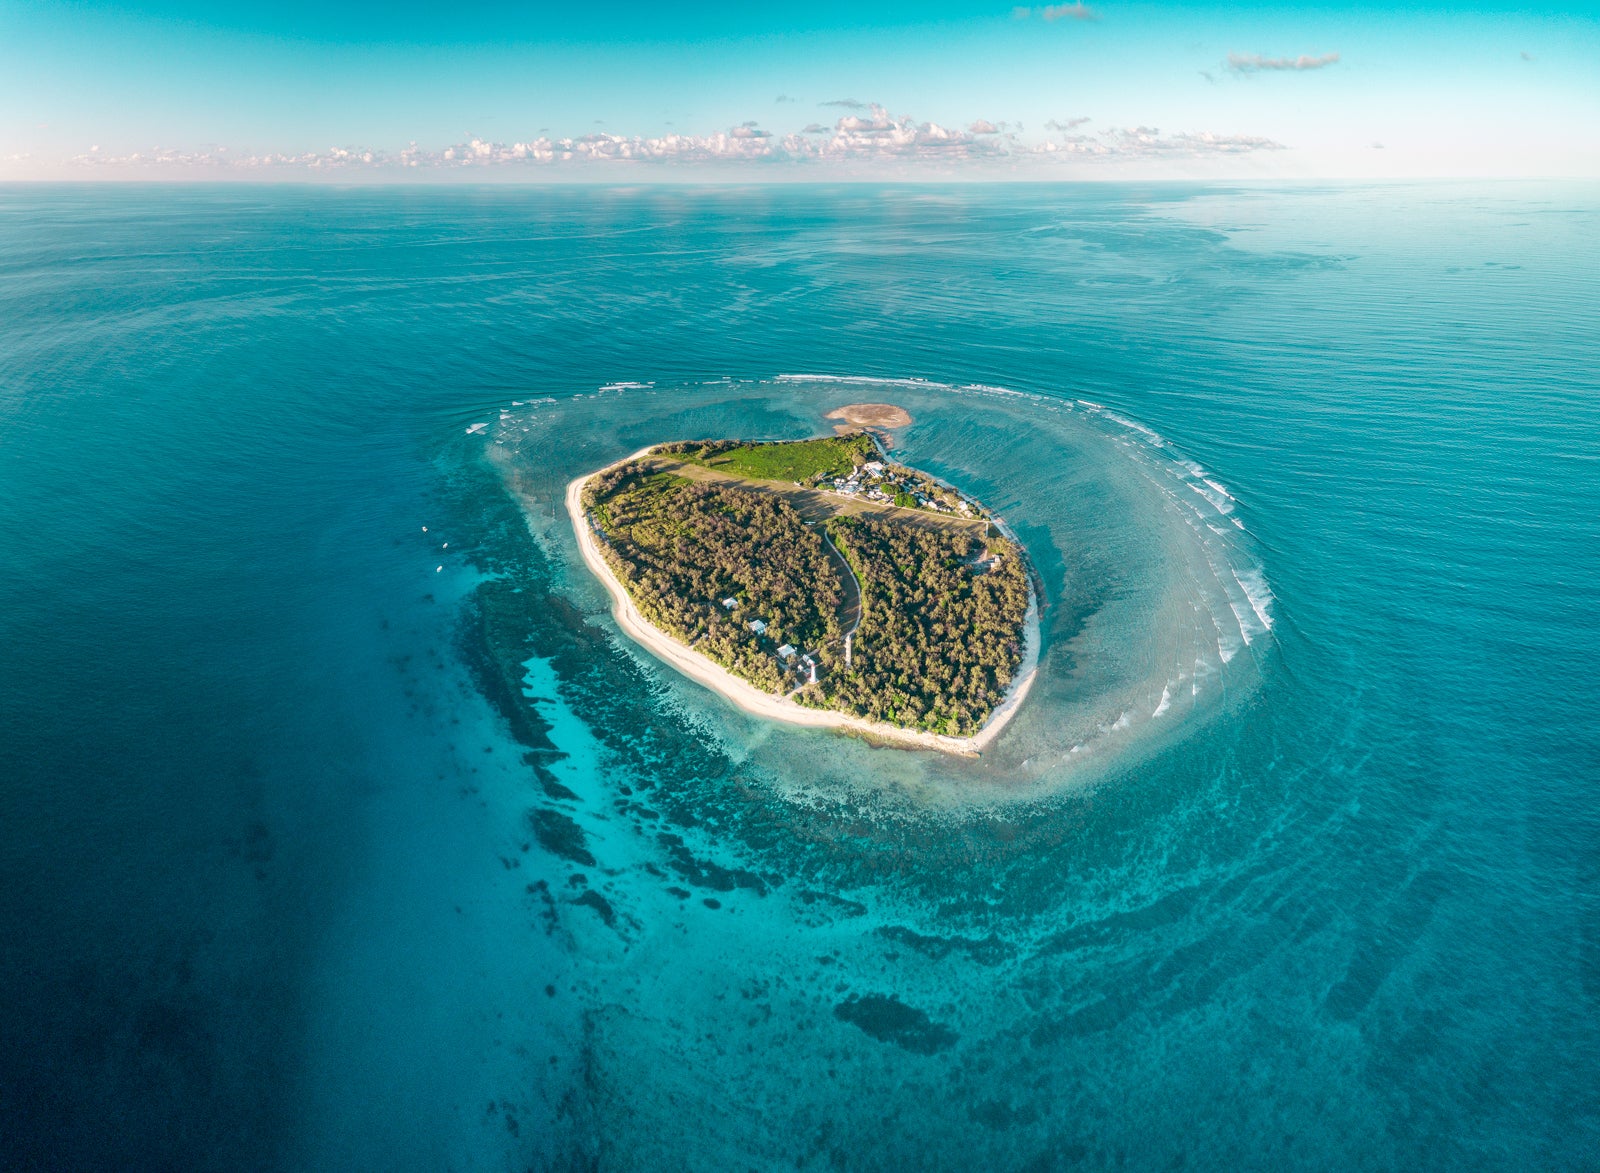 tropical islands to visit near australia